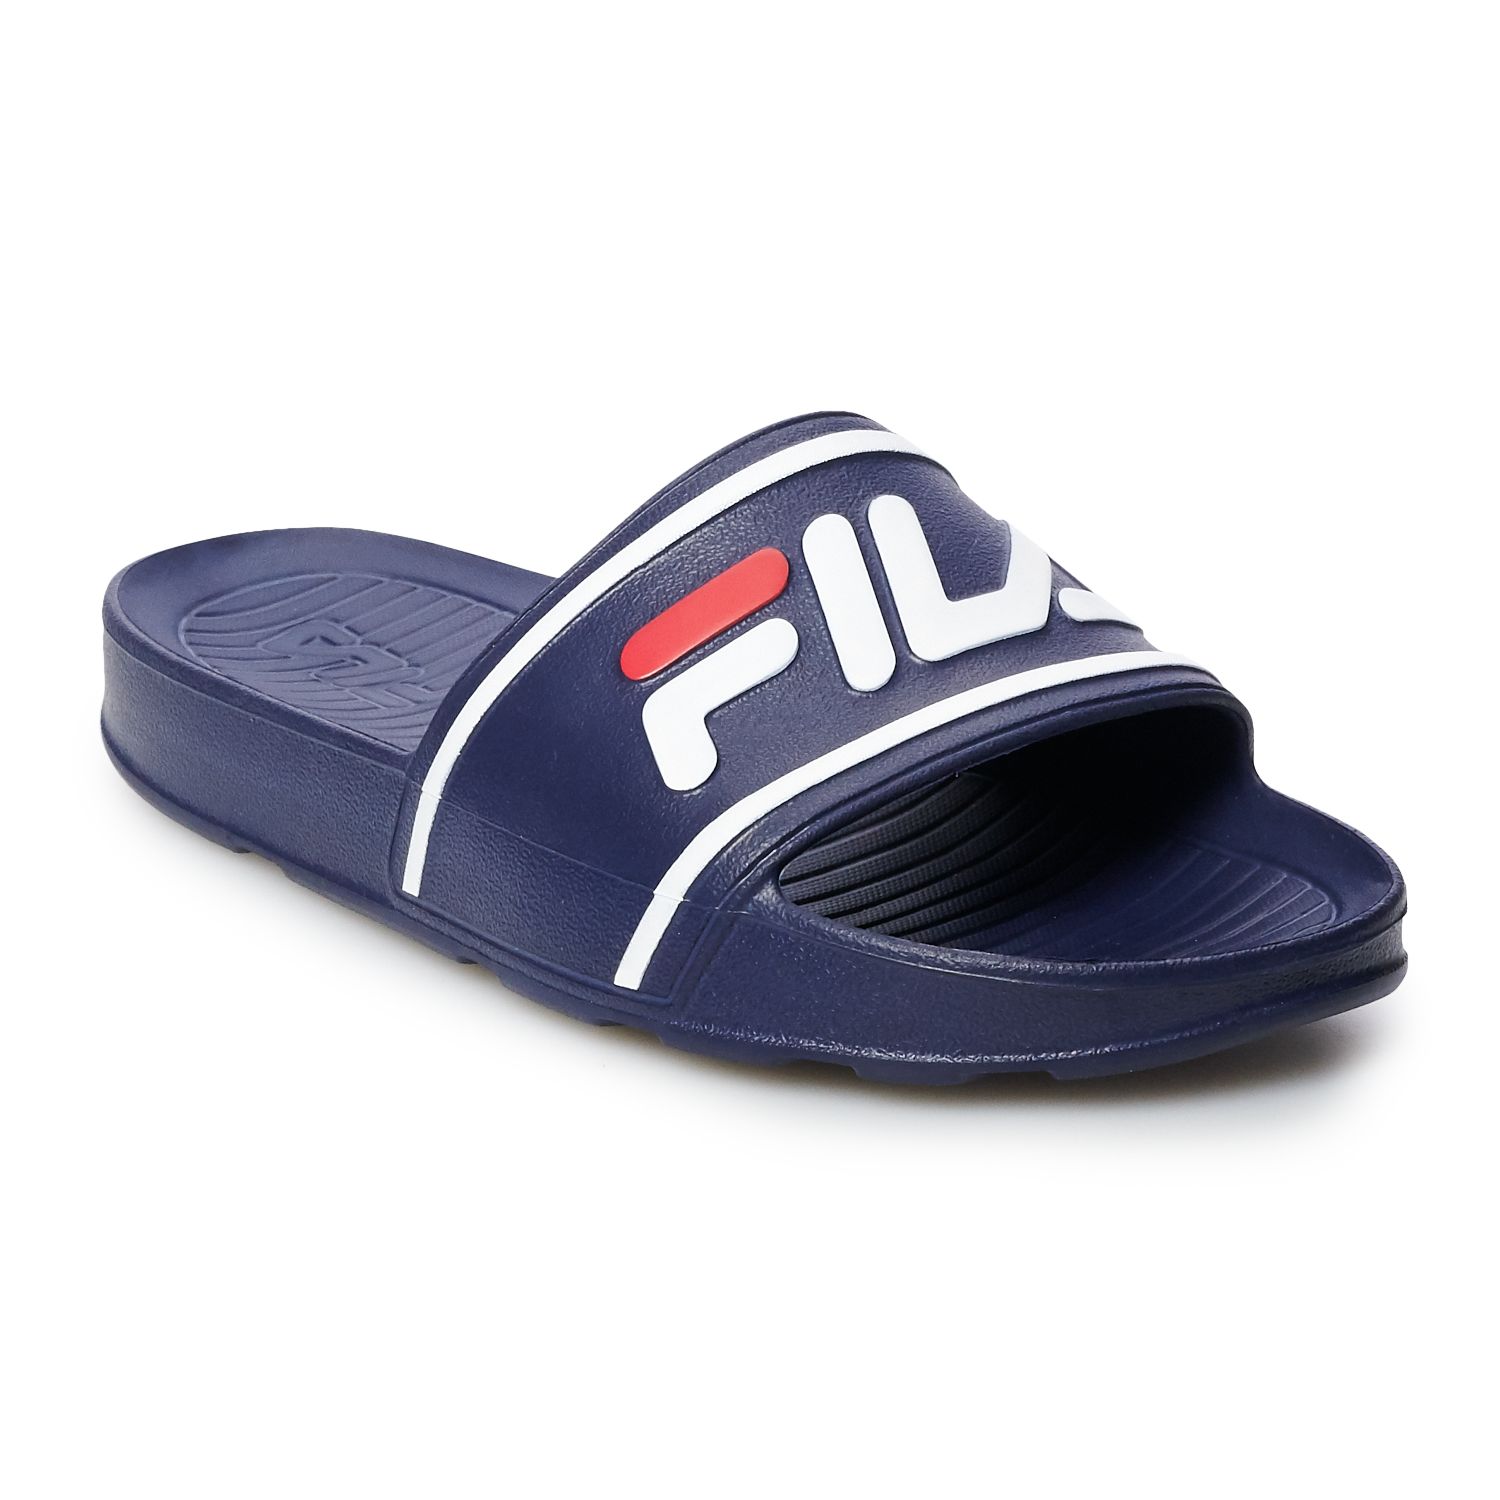 flia sandals